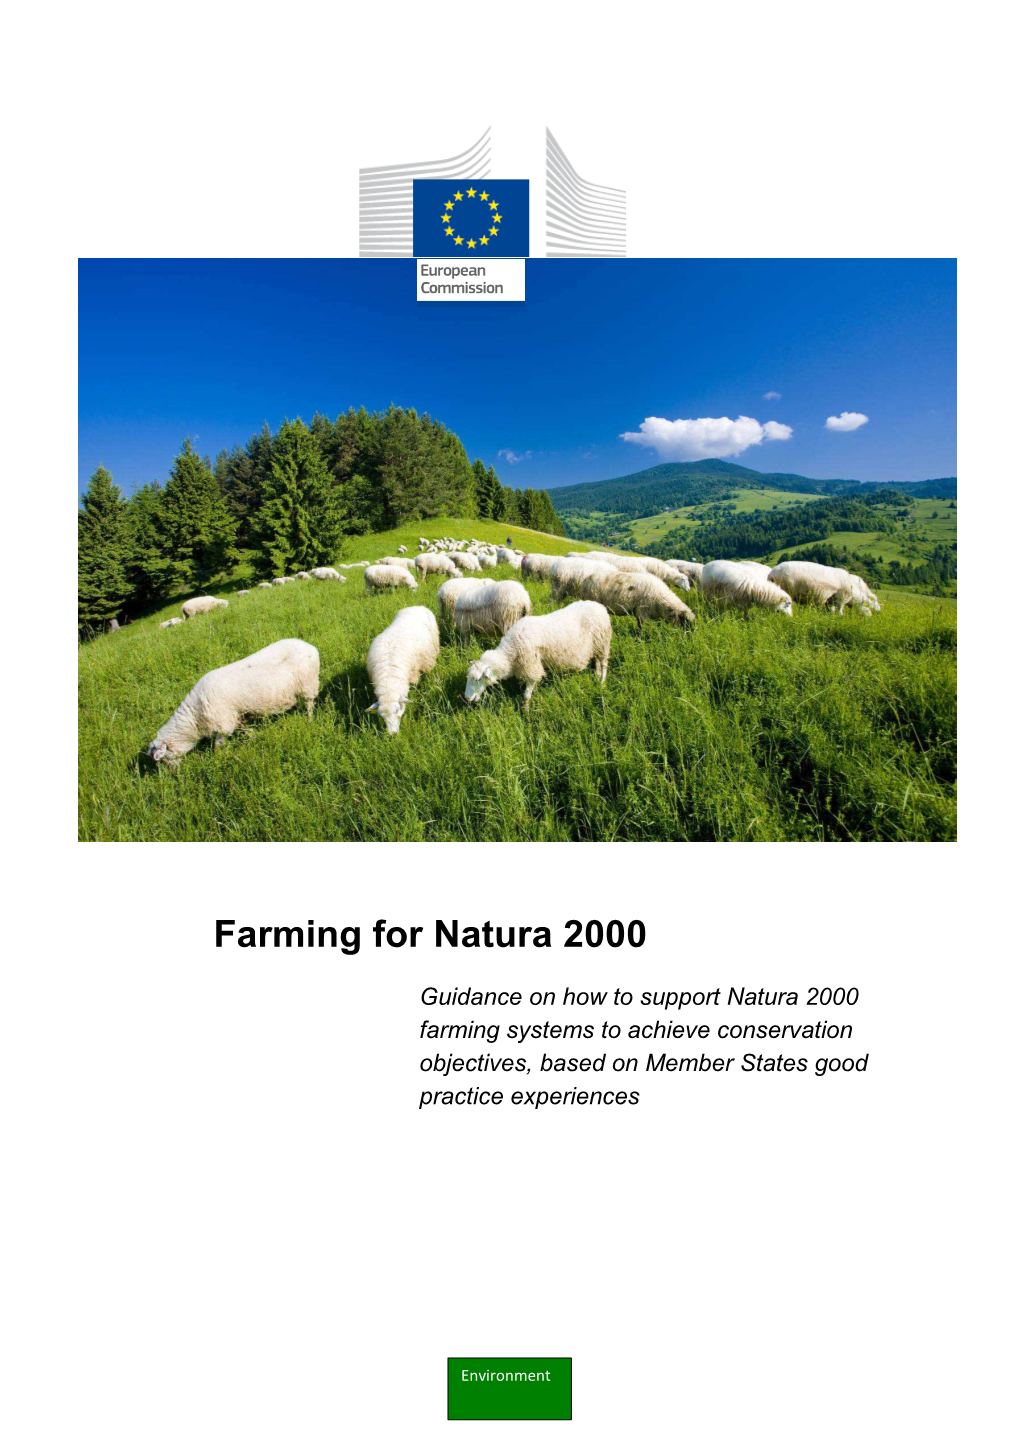 FARMING for NATURA 2000-Final Guidance